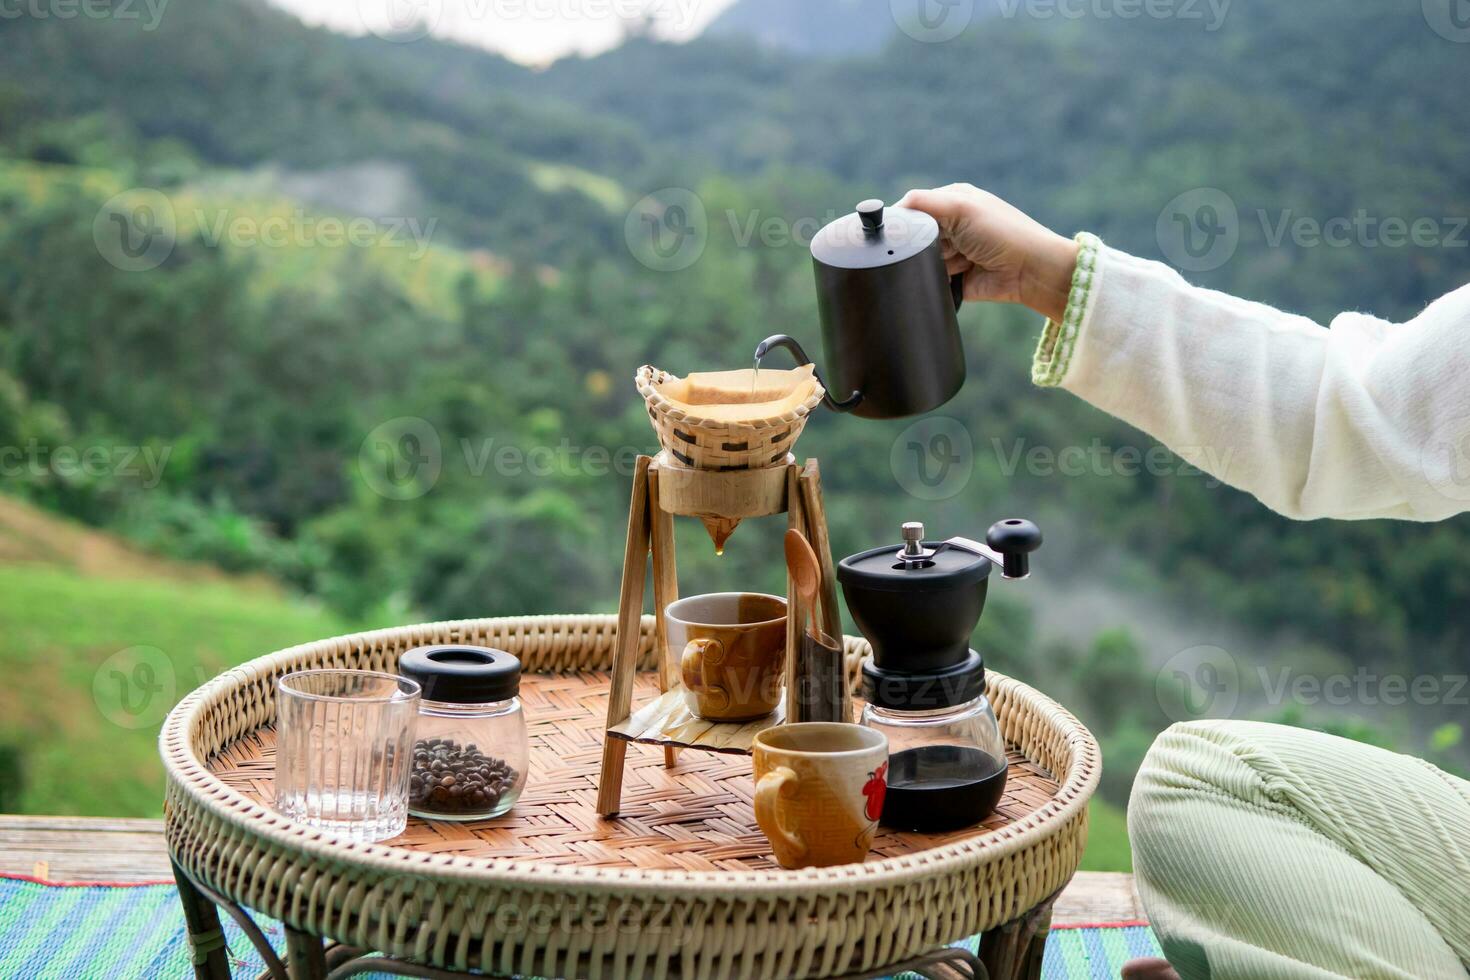 druppelen koffie reeks ochtend- berg visie foto